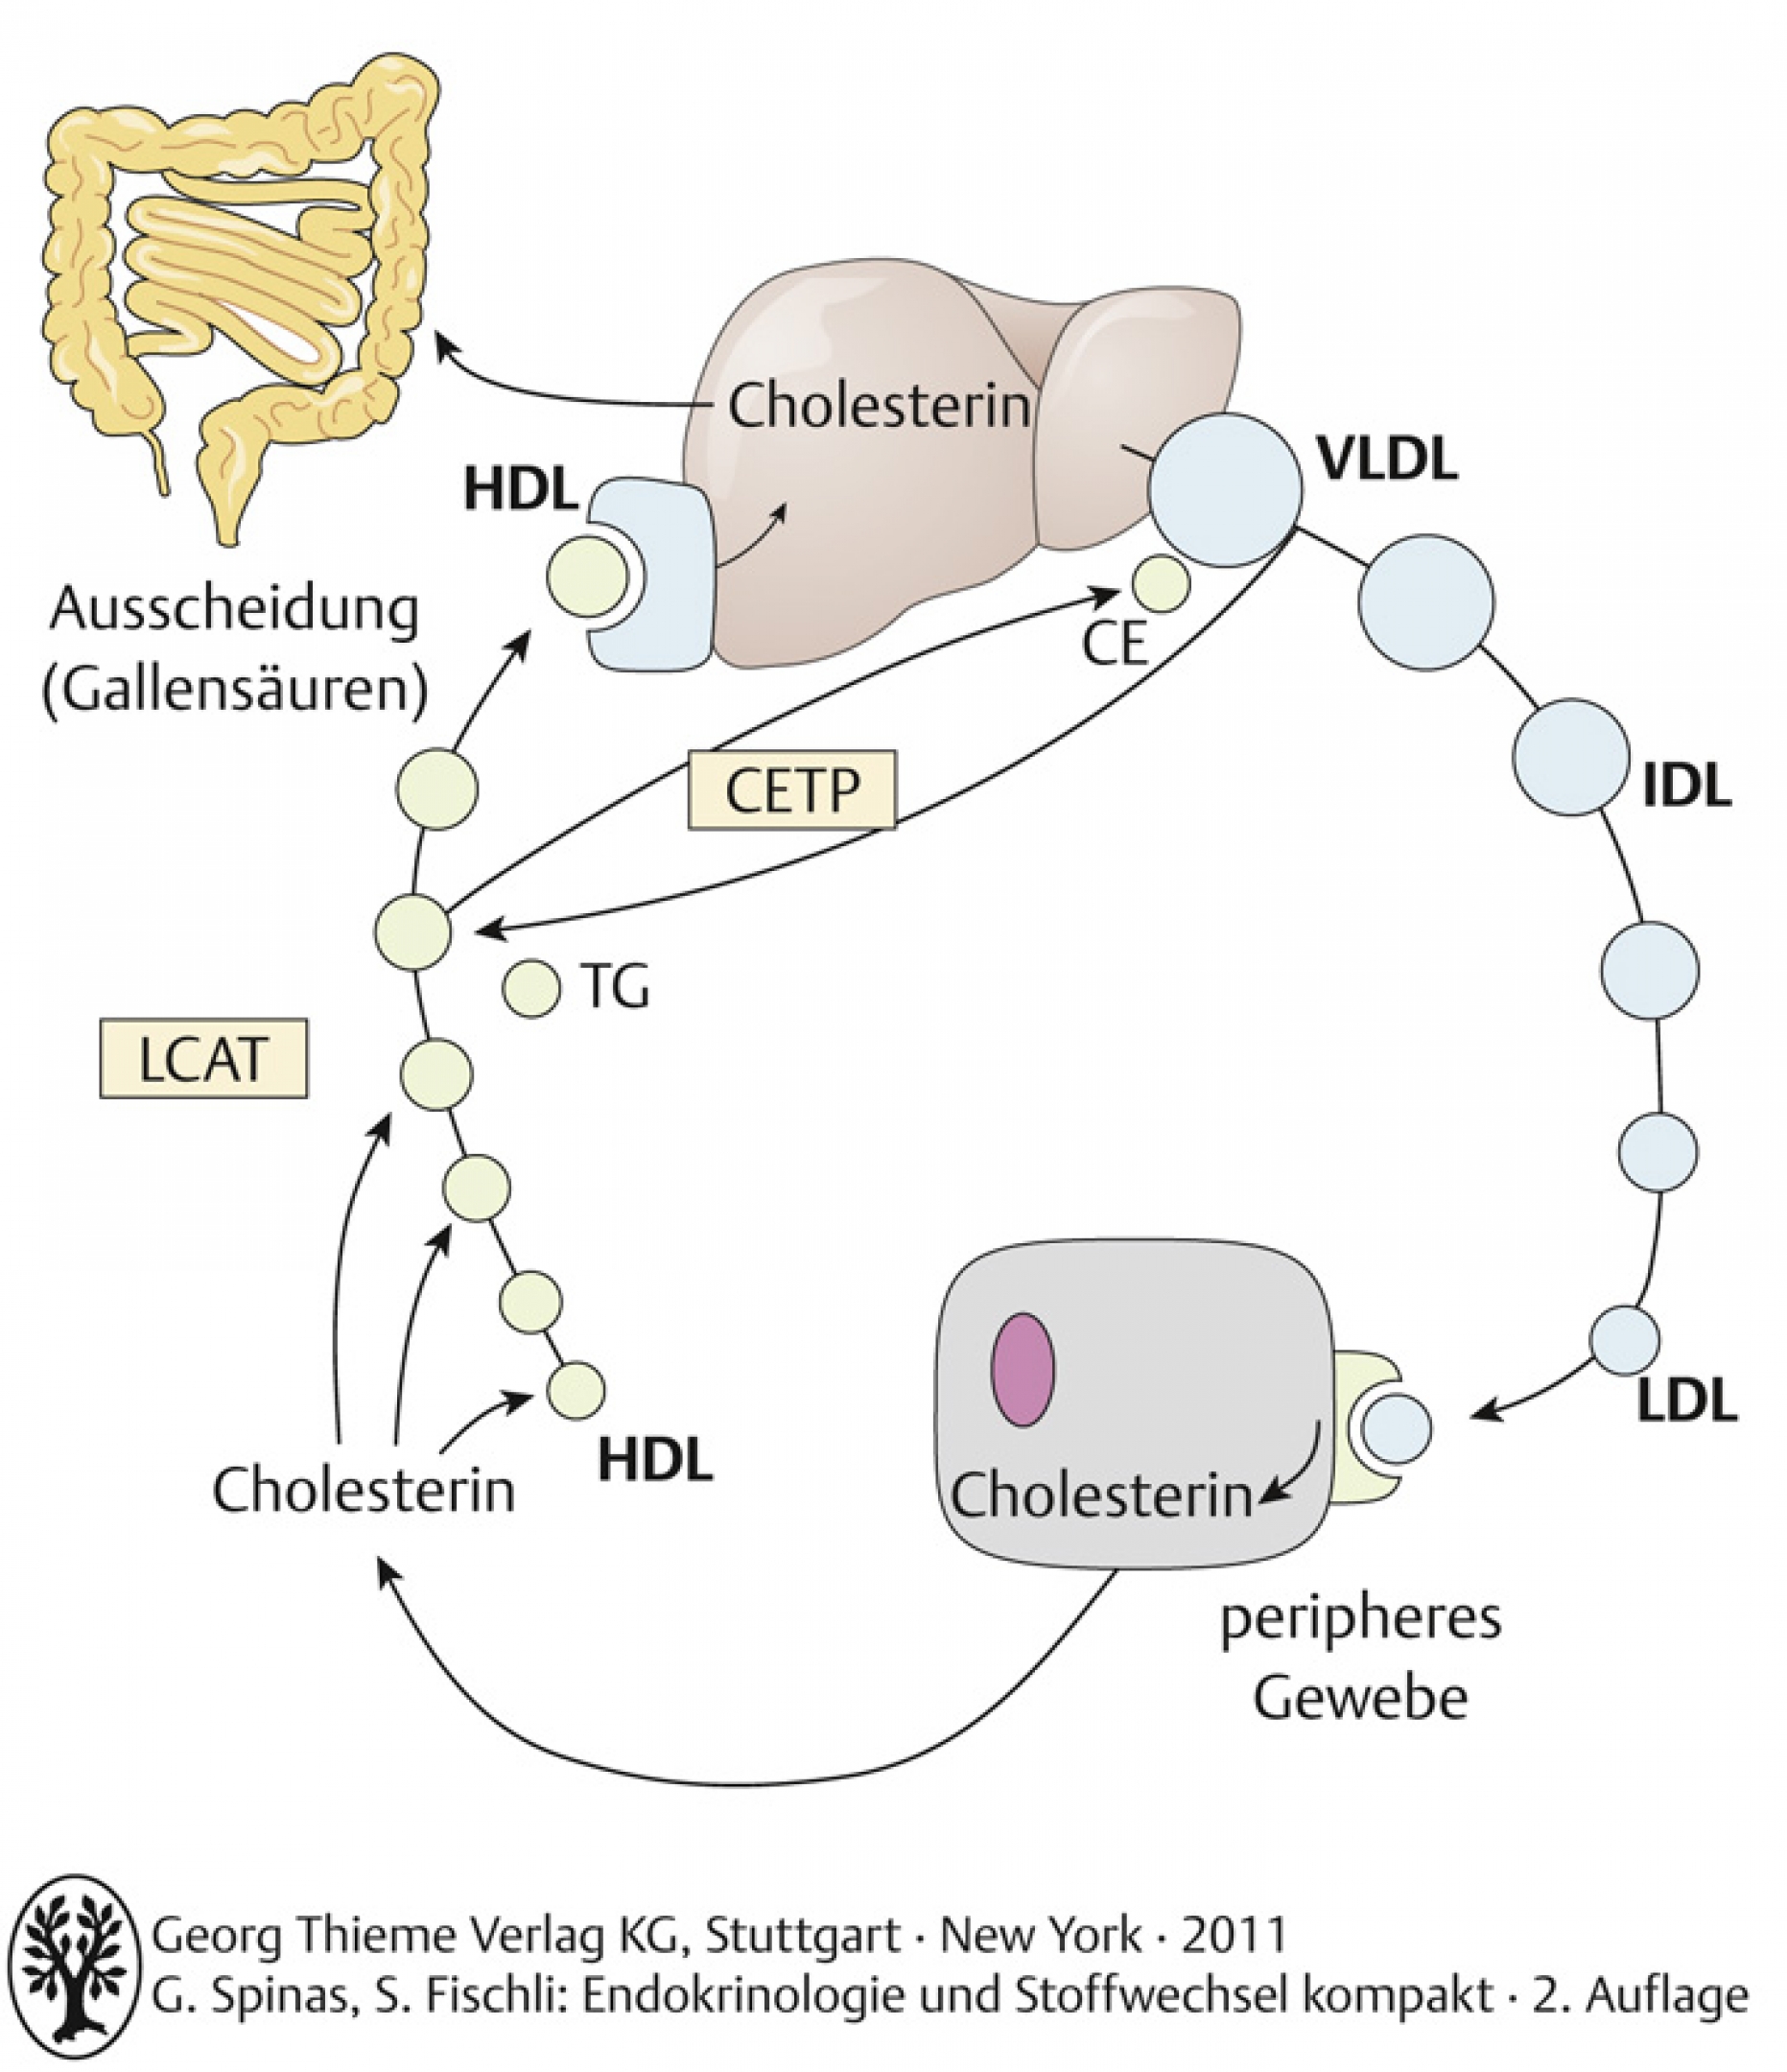 Reverser Cholesterintransport. CEPT: Cholesterinester-Transferprotein, LCAT: Lecithin-Cholesterin-Acyltransferase, CE: Cholesterinester, TG: Triglyzeride